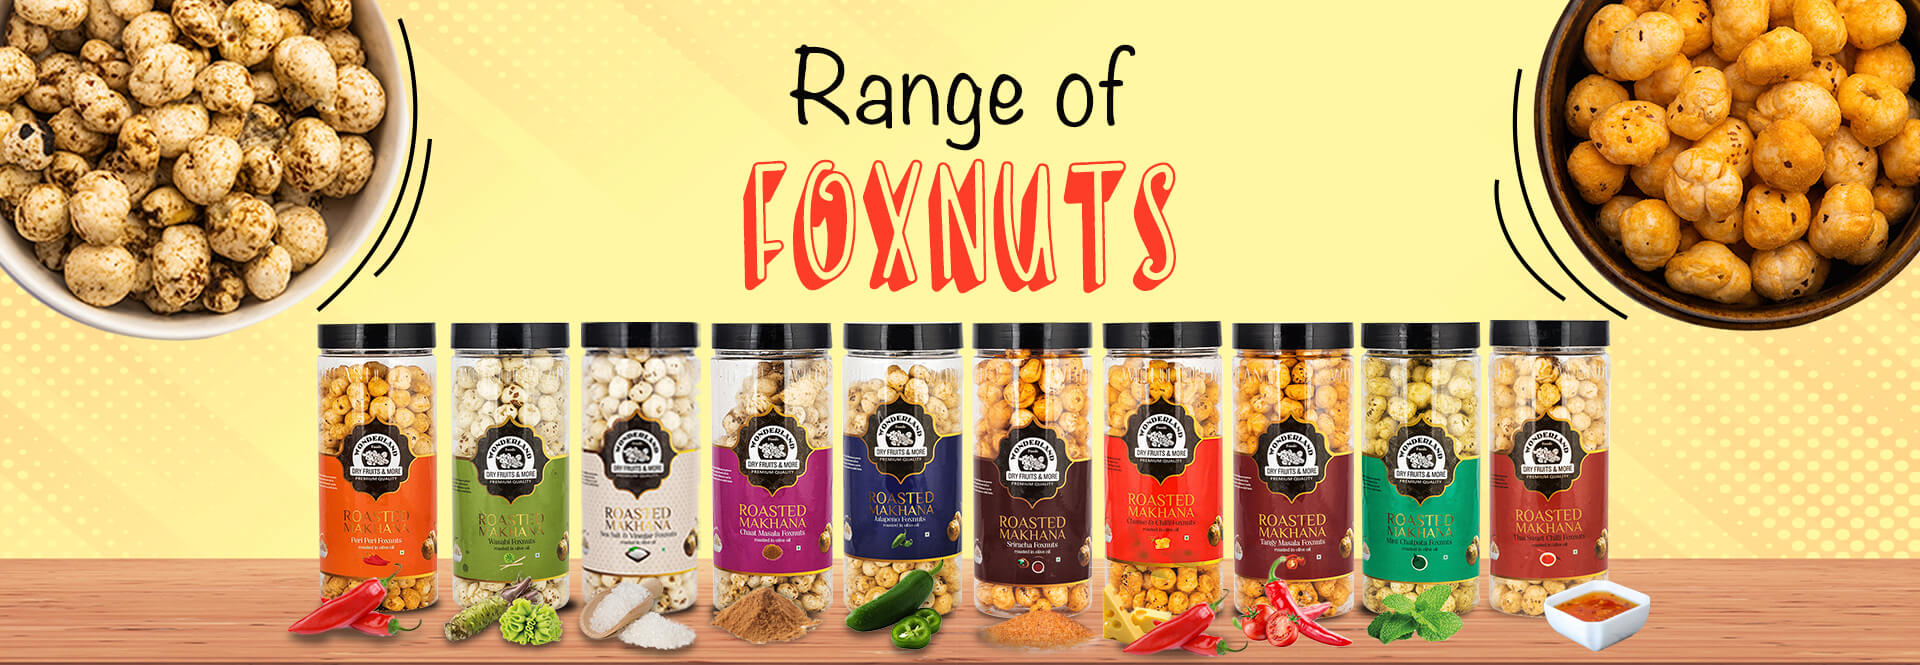 Range of Foxnuts